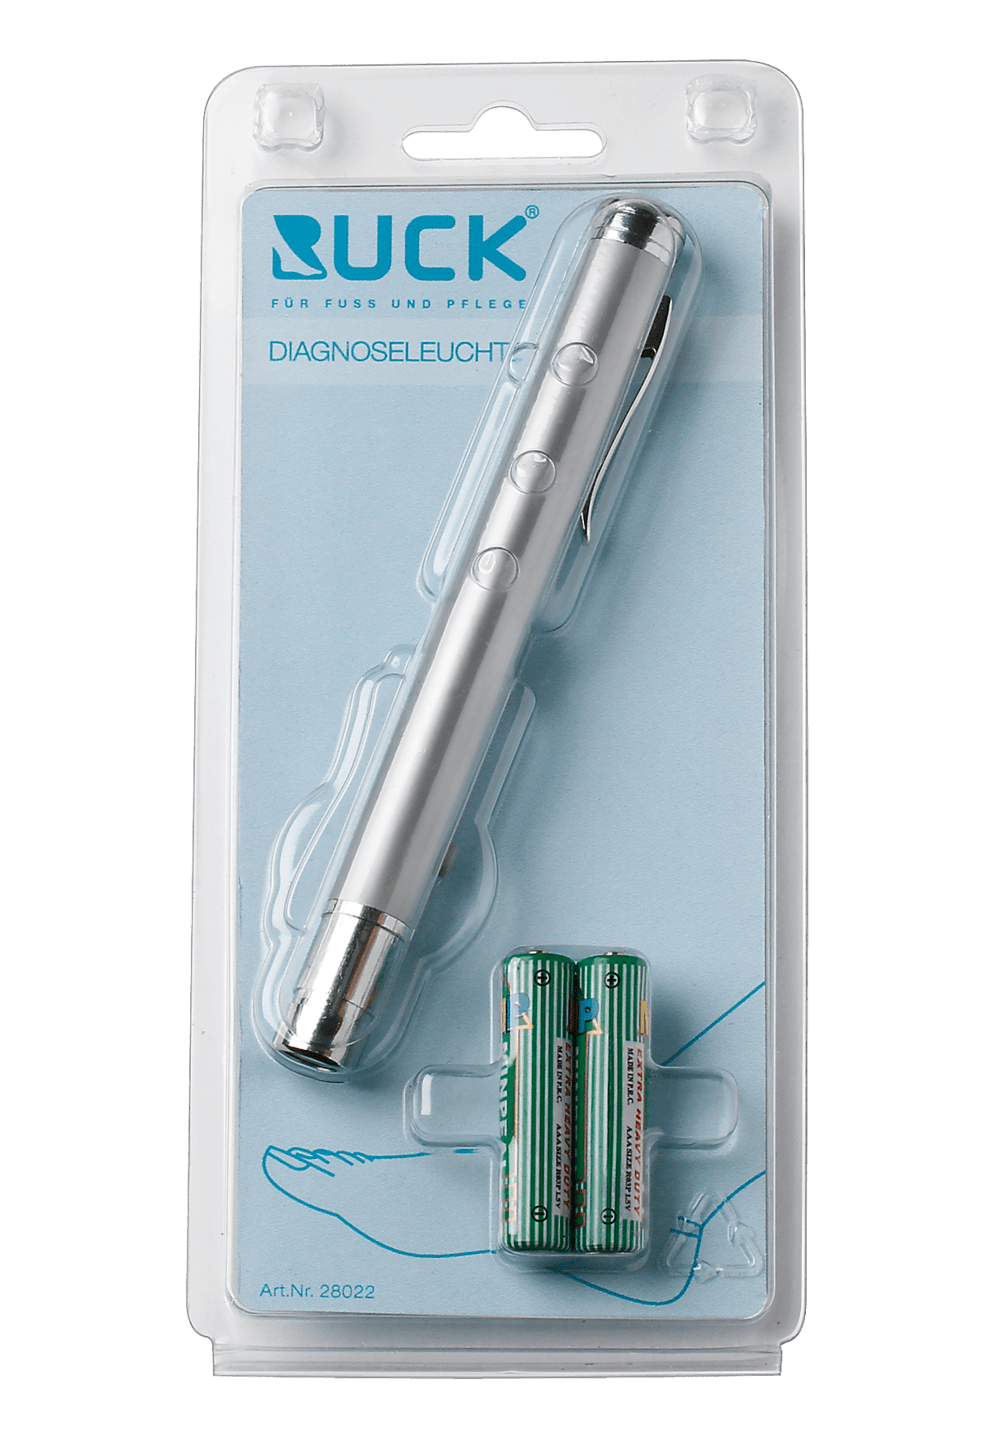 RUCK - Diagnostic lamp